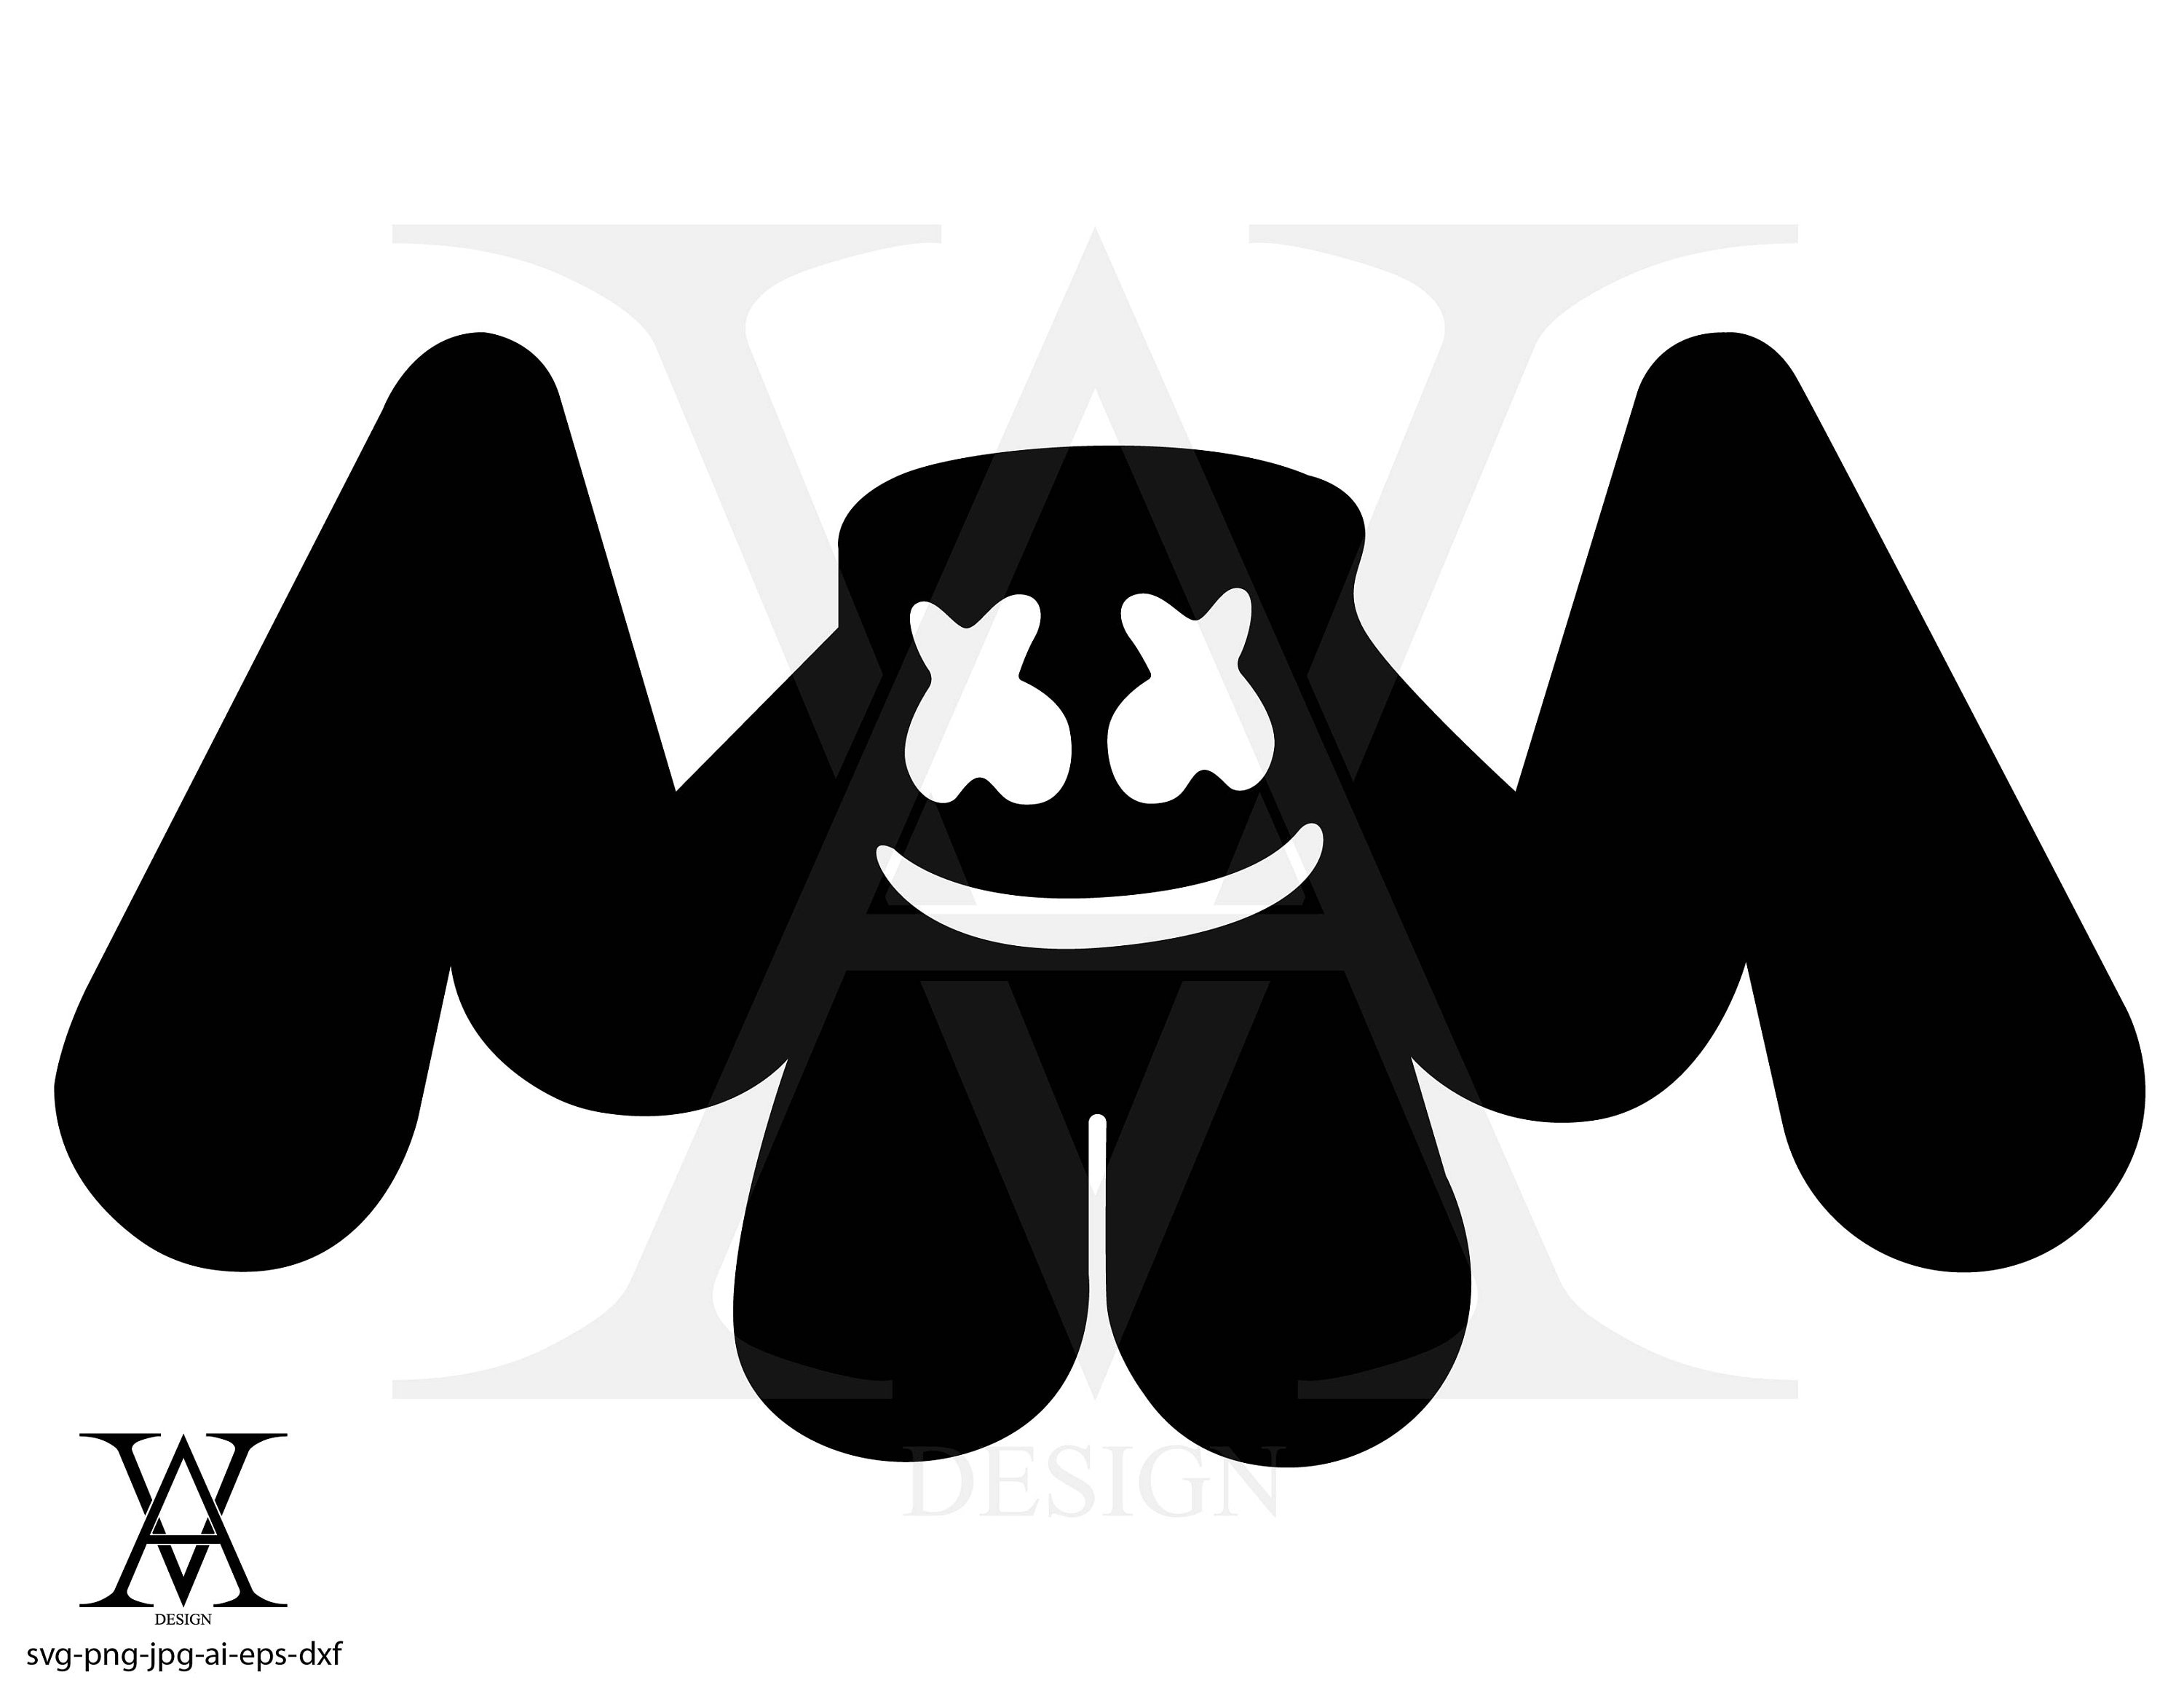 Dj marshmello logo silhouette clipart vector. INSTANT | Etsy